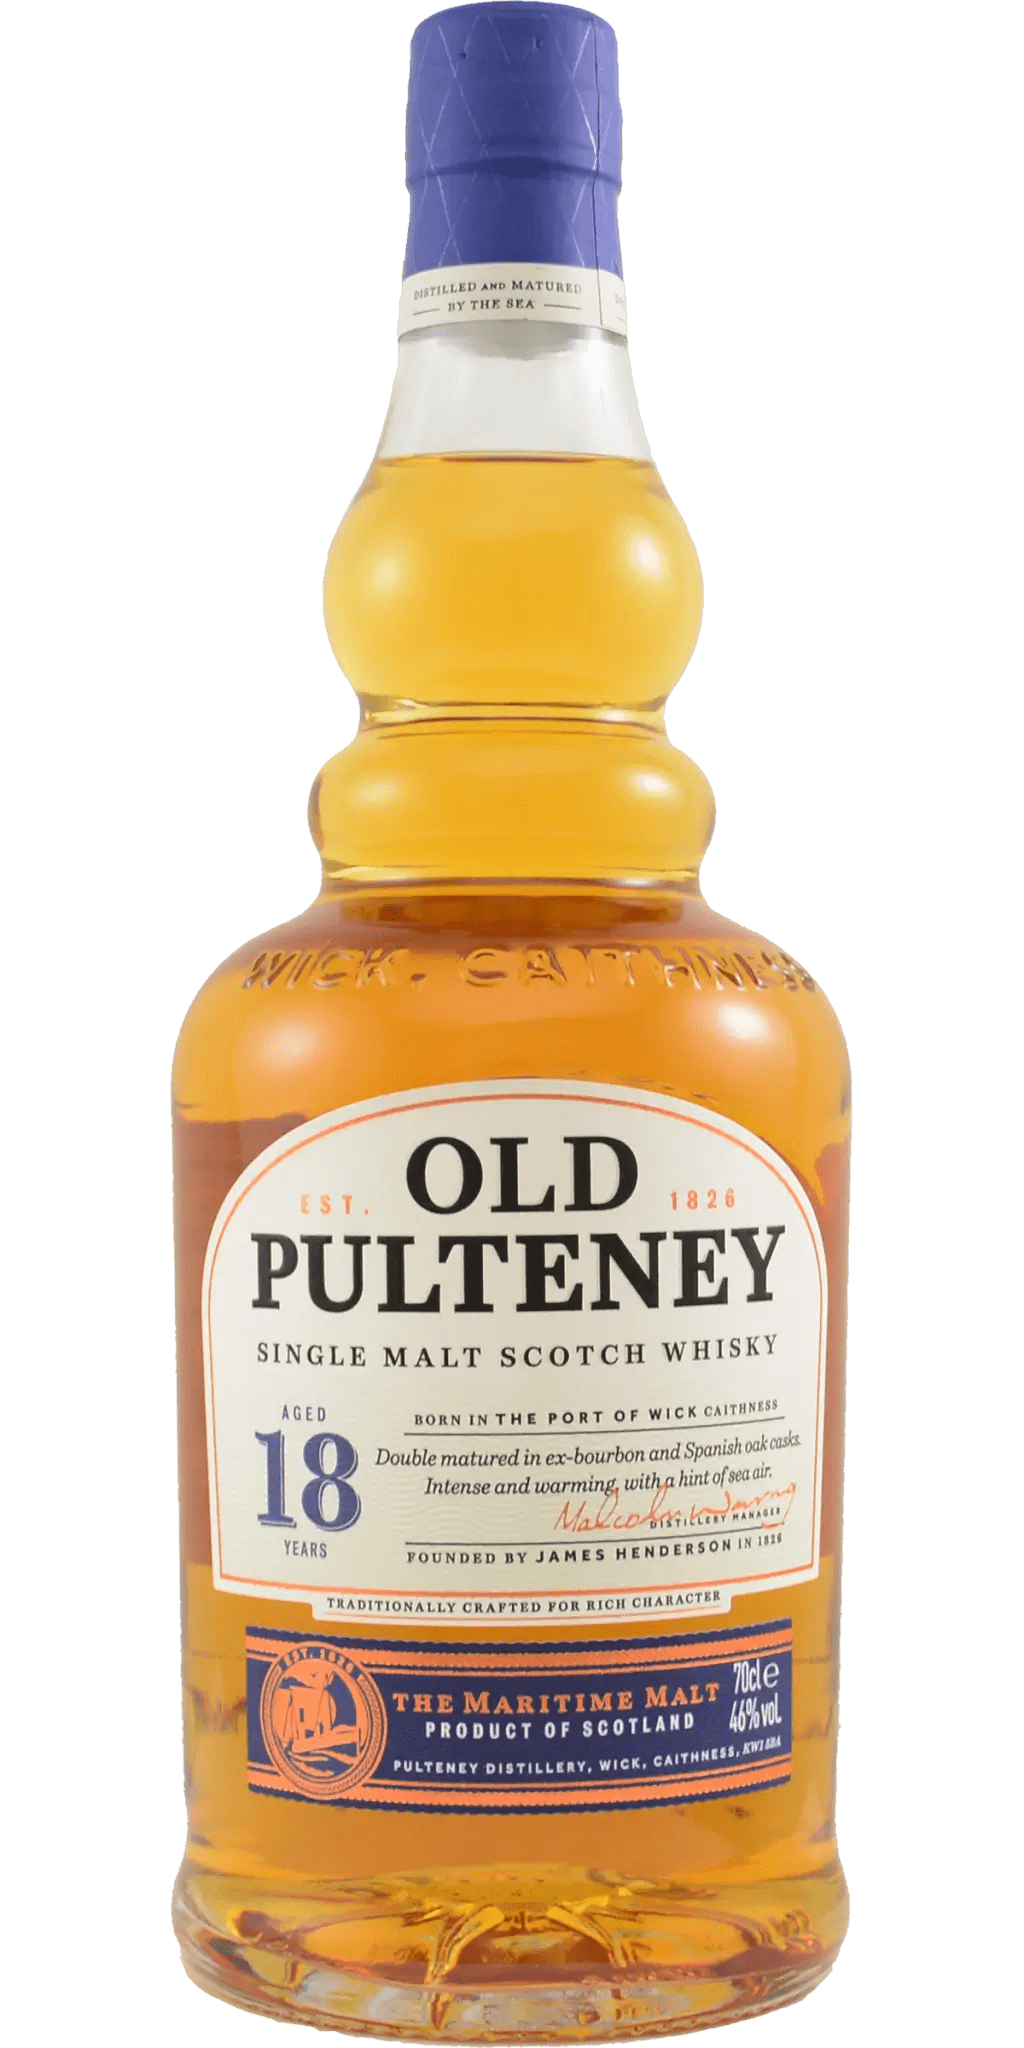 Old Pulteney 18 Years Old Single Malt Scotch Whisky